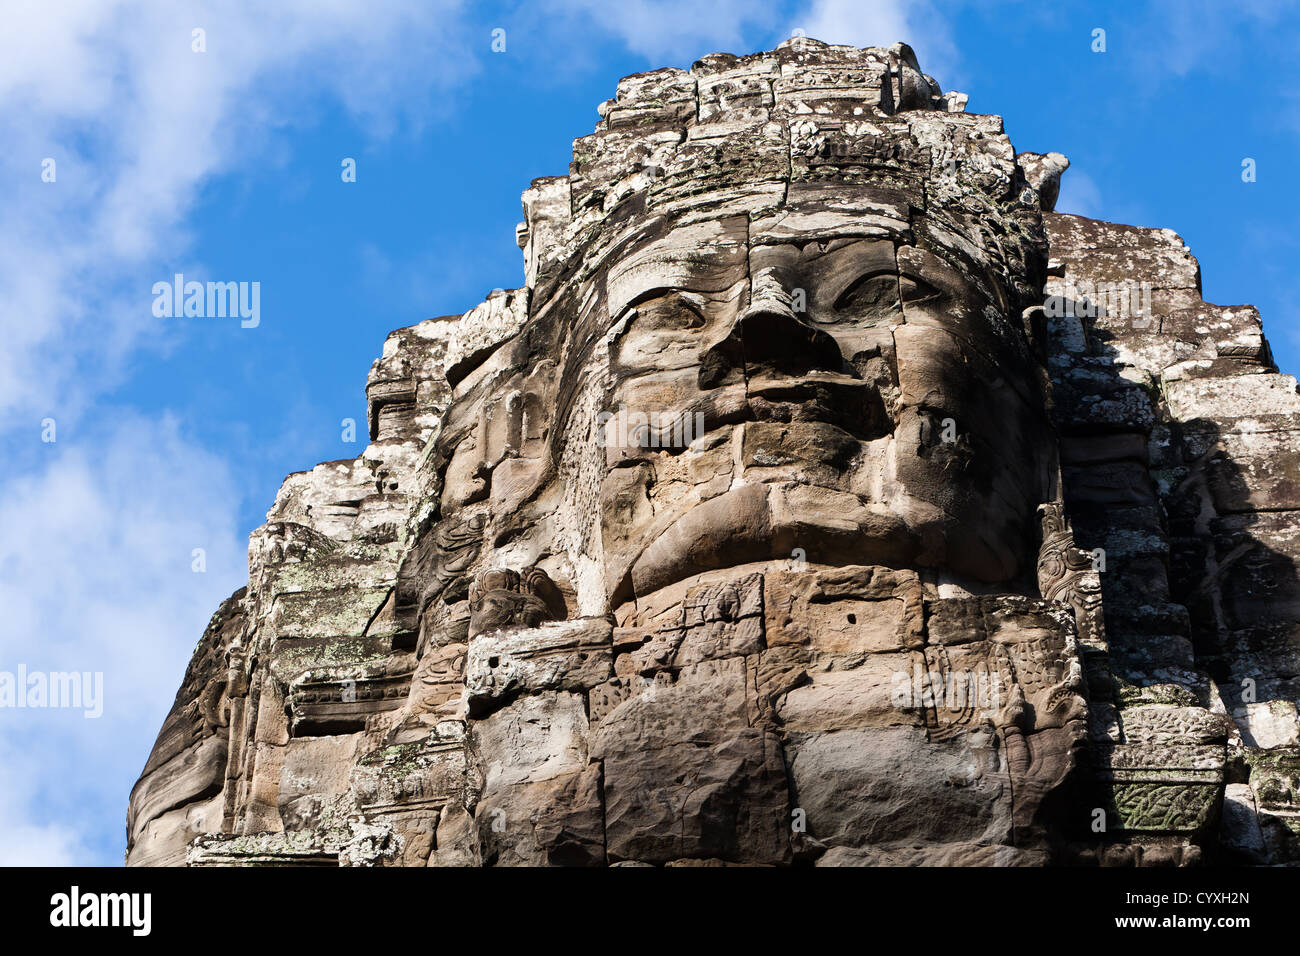 Nahaufnahme des berühmten Kopf Statue des antiken prasat Bayon Tempel in Angkor Wat, Siem Reap, Kambodscha ein Unesco Weltkulturerbe Stockfoto